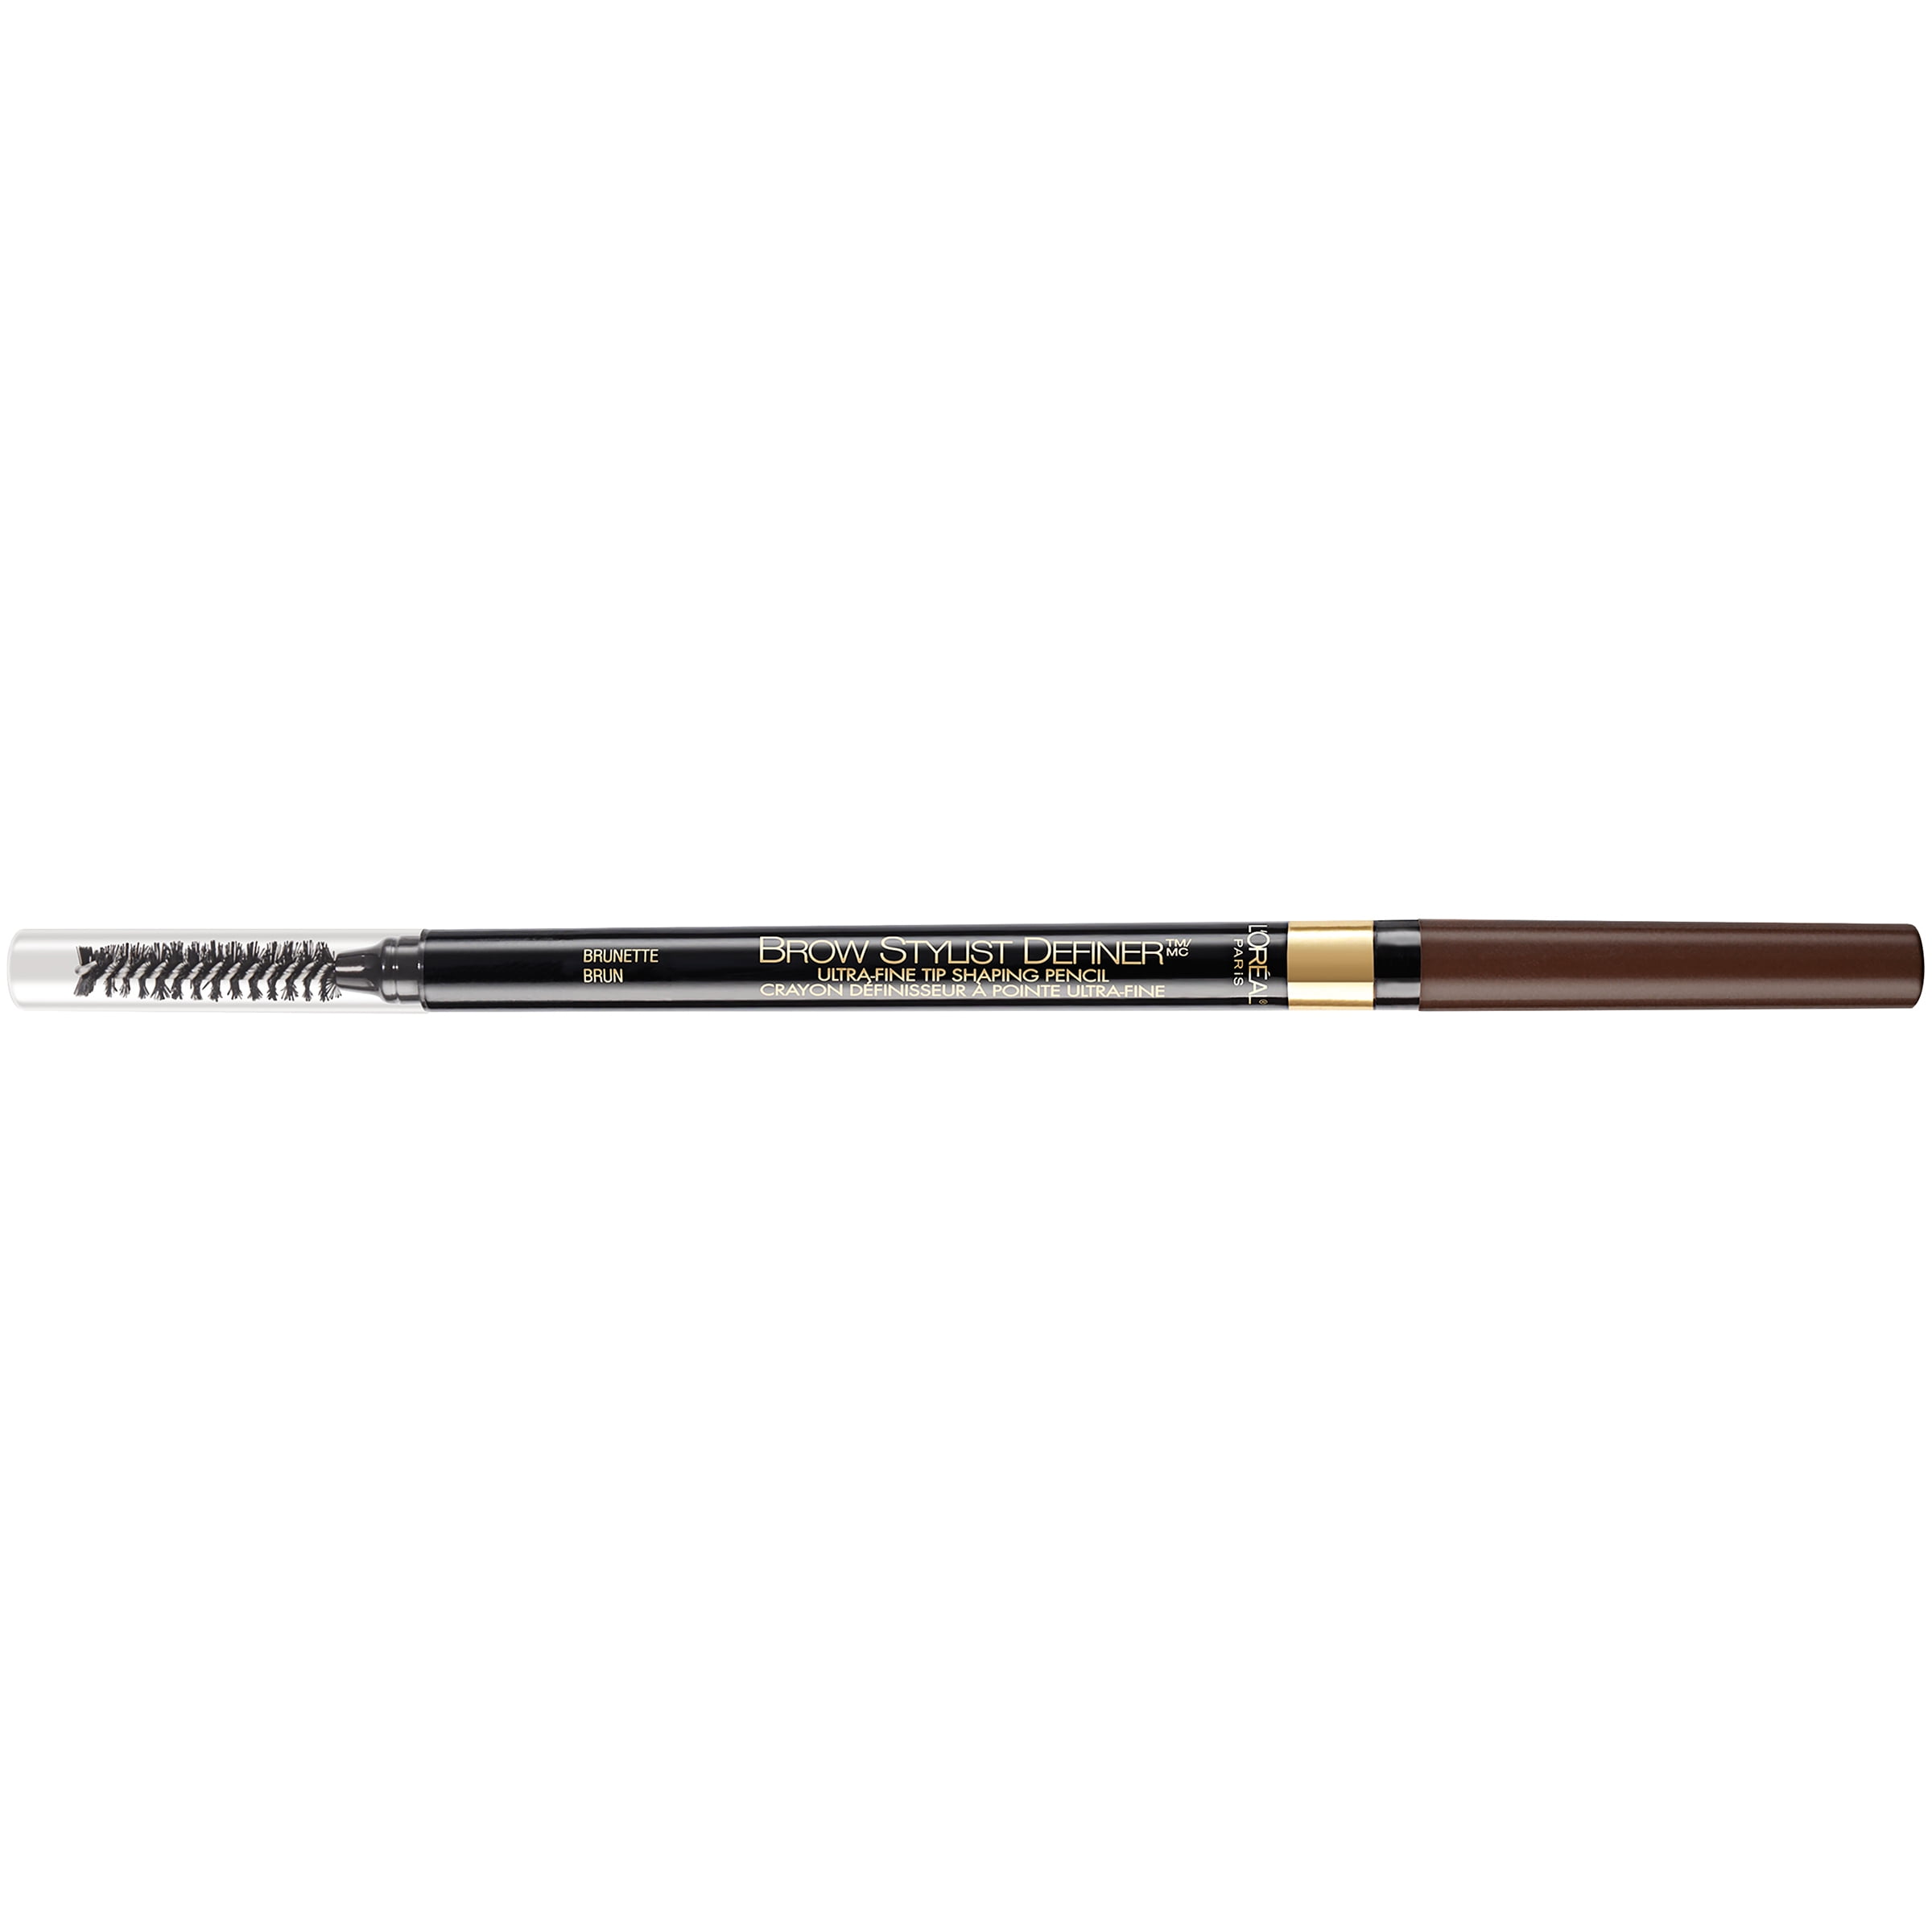 L'Oreal Paris Brow Stylist Definer Waterproof Eyebrow Mechanical Pencil, Brunette